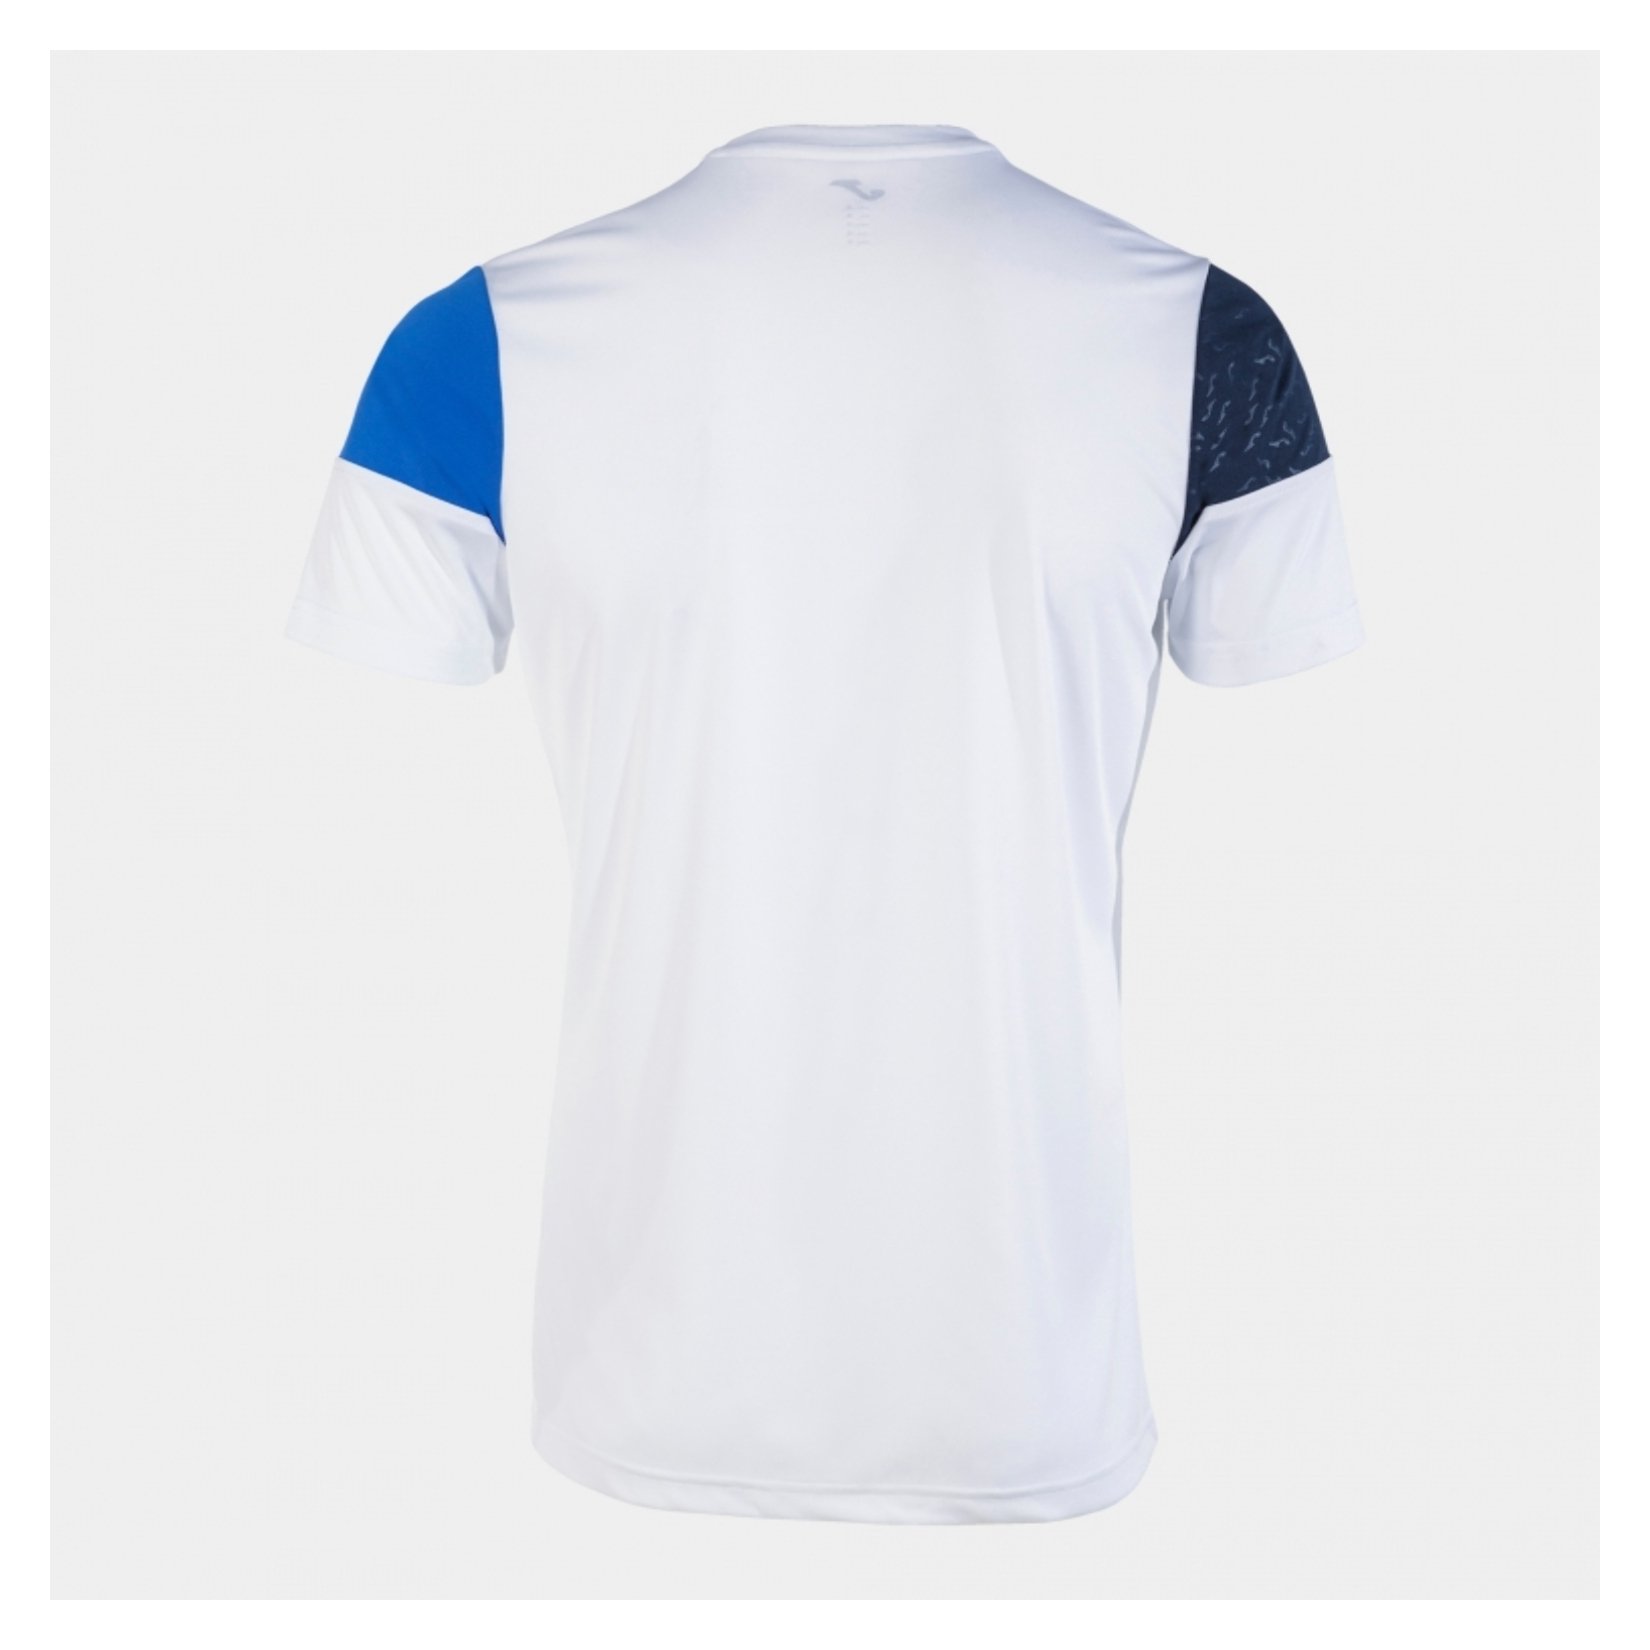 Joma Crew V Short Sleeve T-Shirt White-Royal-Navy